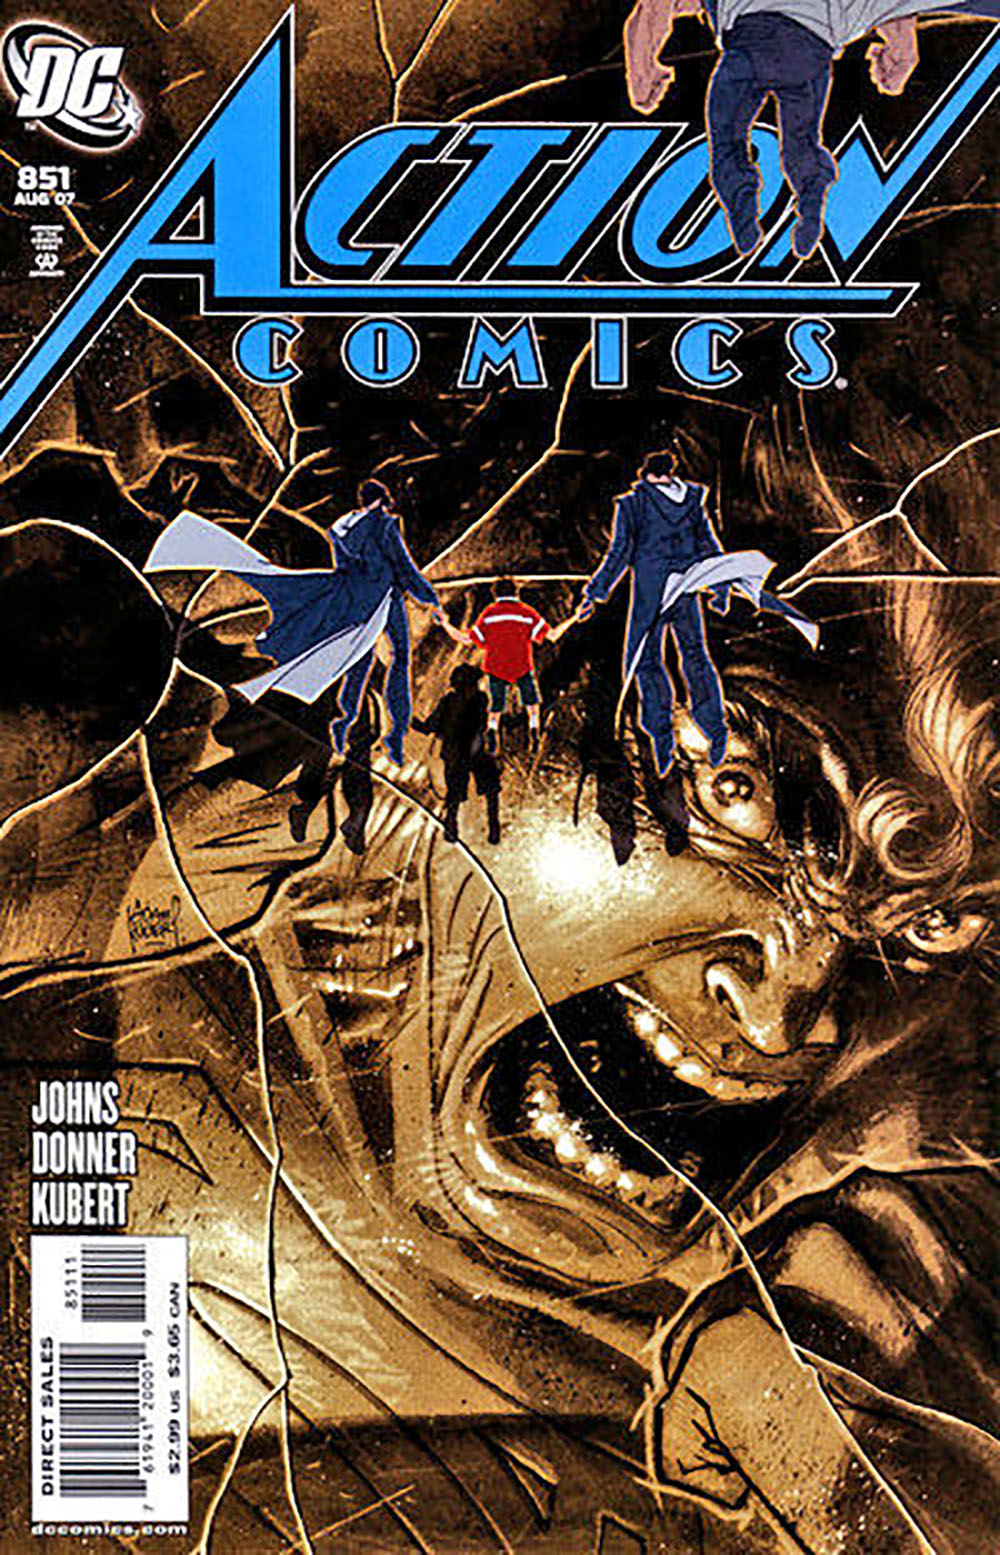 Action Comics #851 (1938)